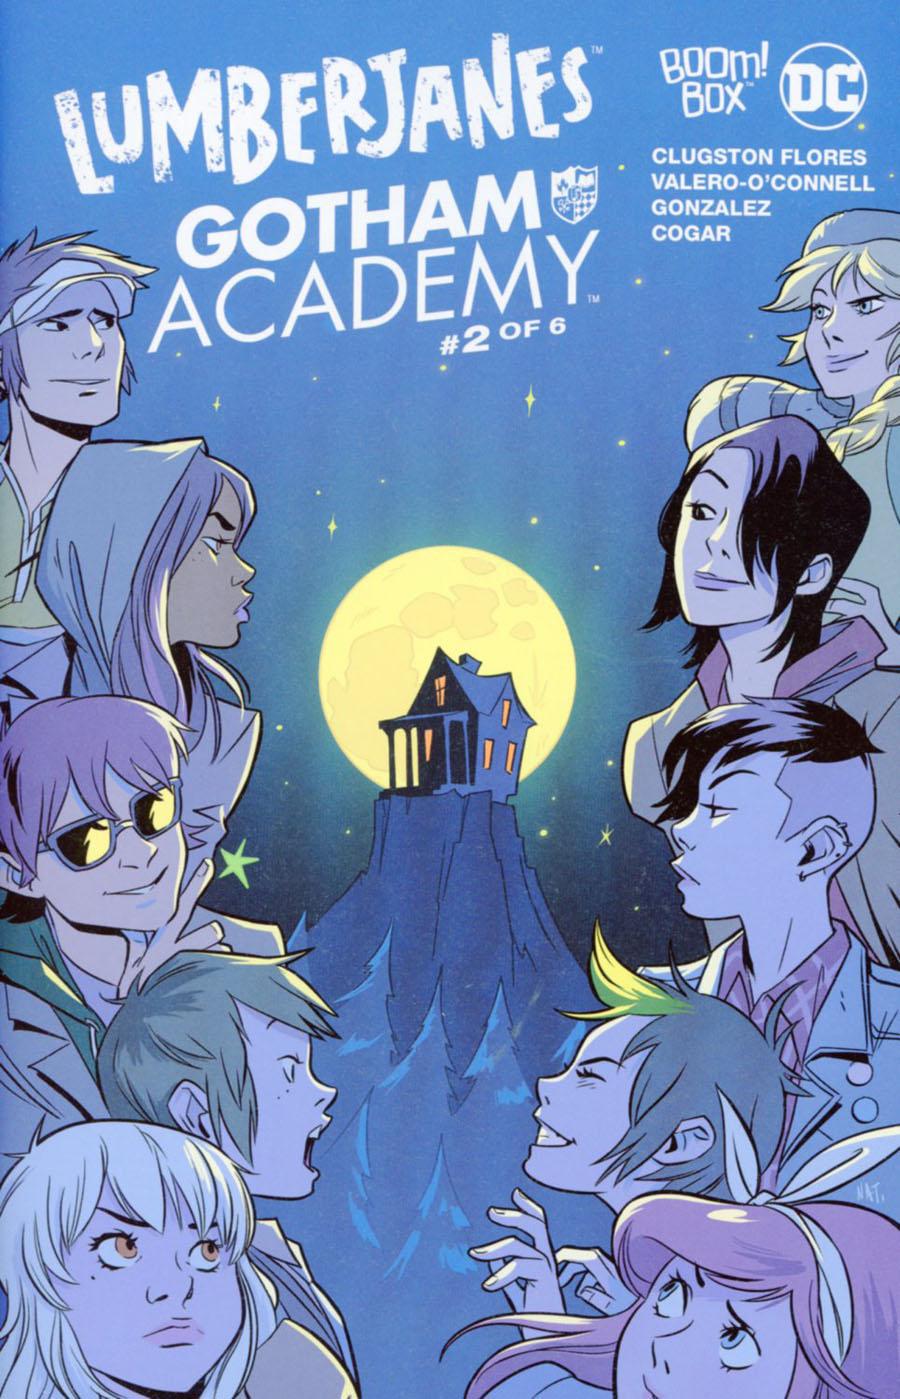 Lumberjanes Gotham Academy Vol. 1 #2